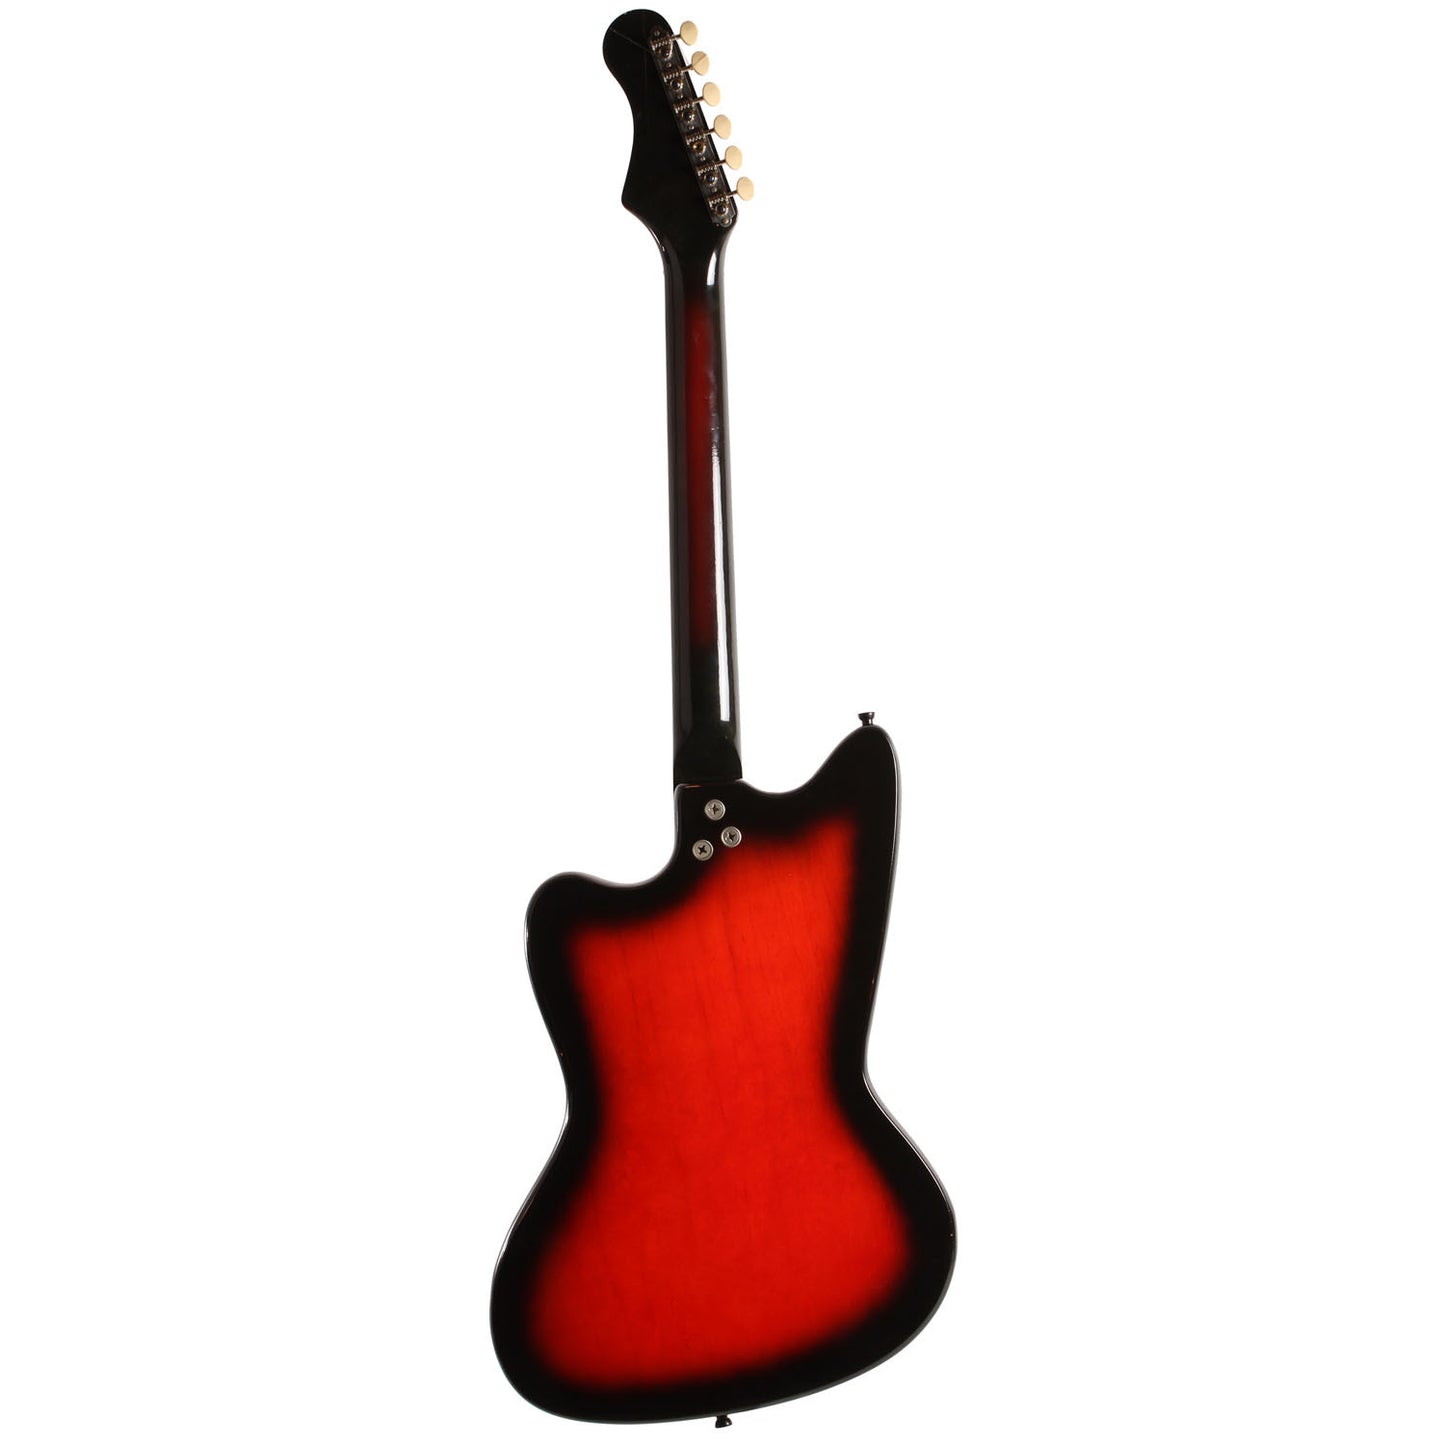 1965 Silvertone 1478 Silhouette - Garrett Park Guitars
 - 6